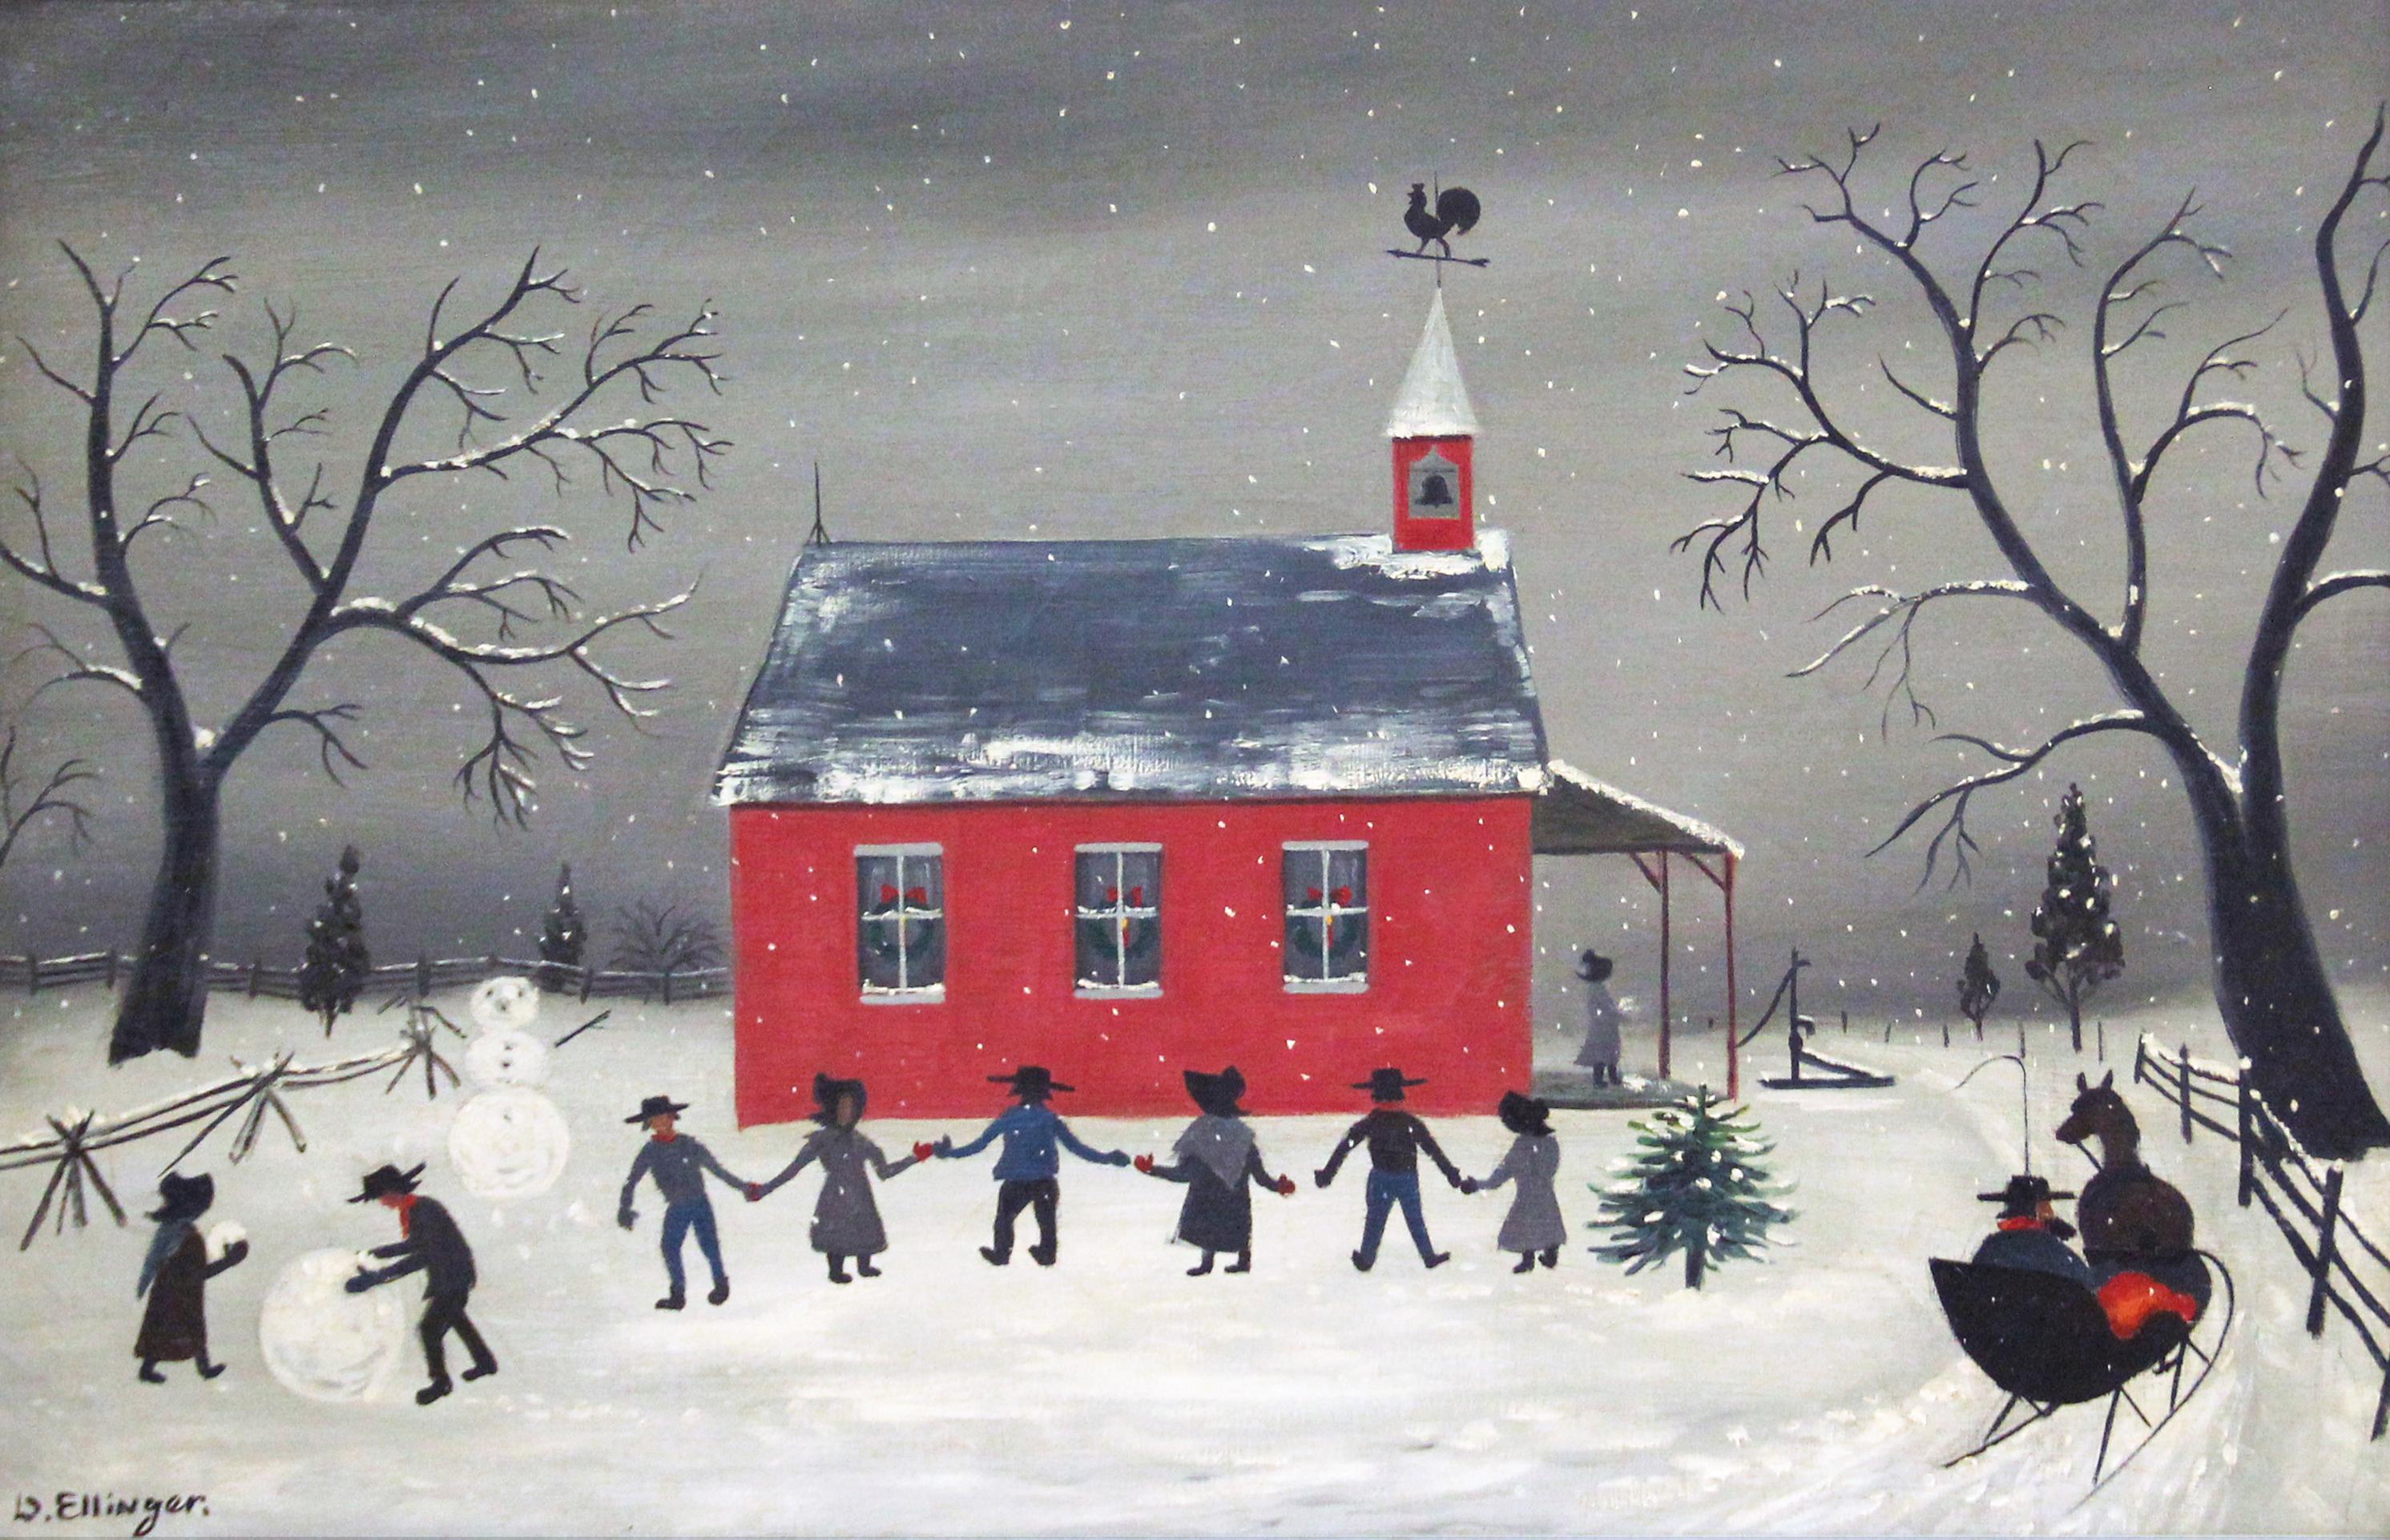 Amish School, Folk Winter Landscape with Children at Play, Pennsylvania Dutch